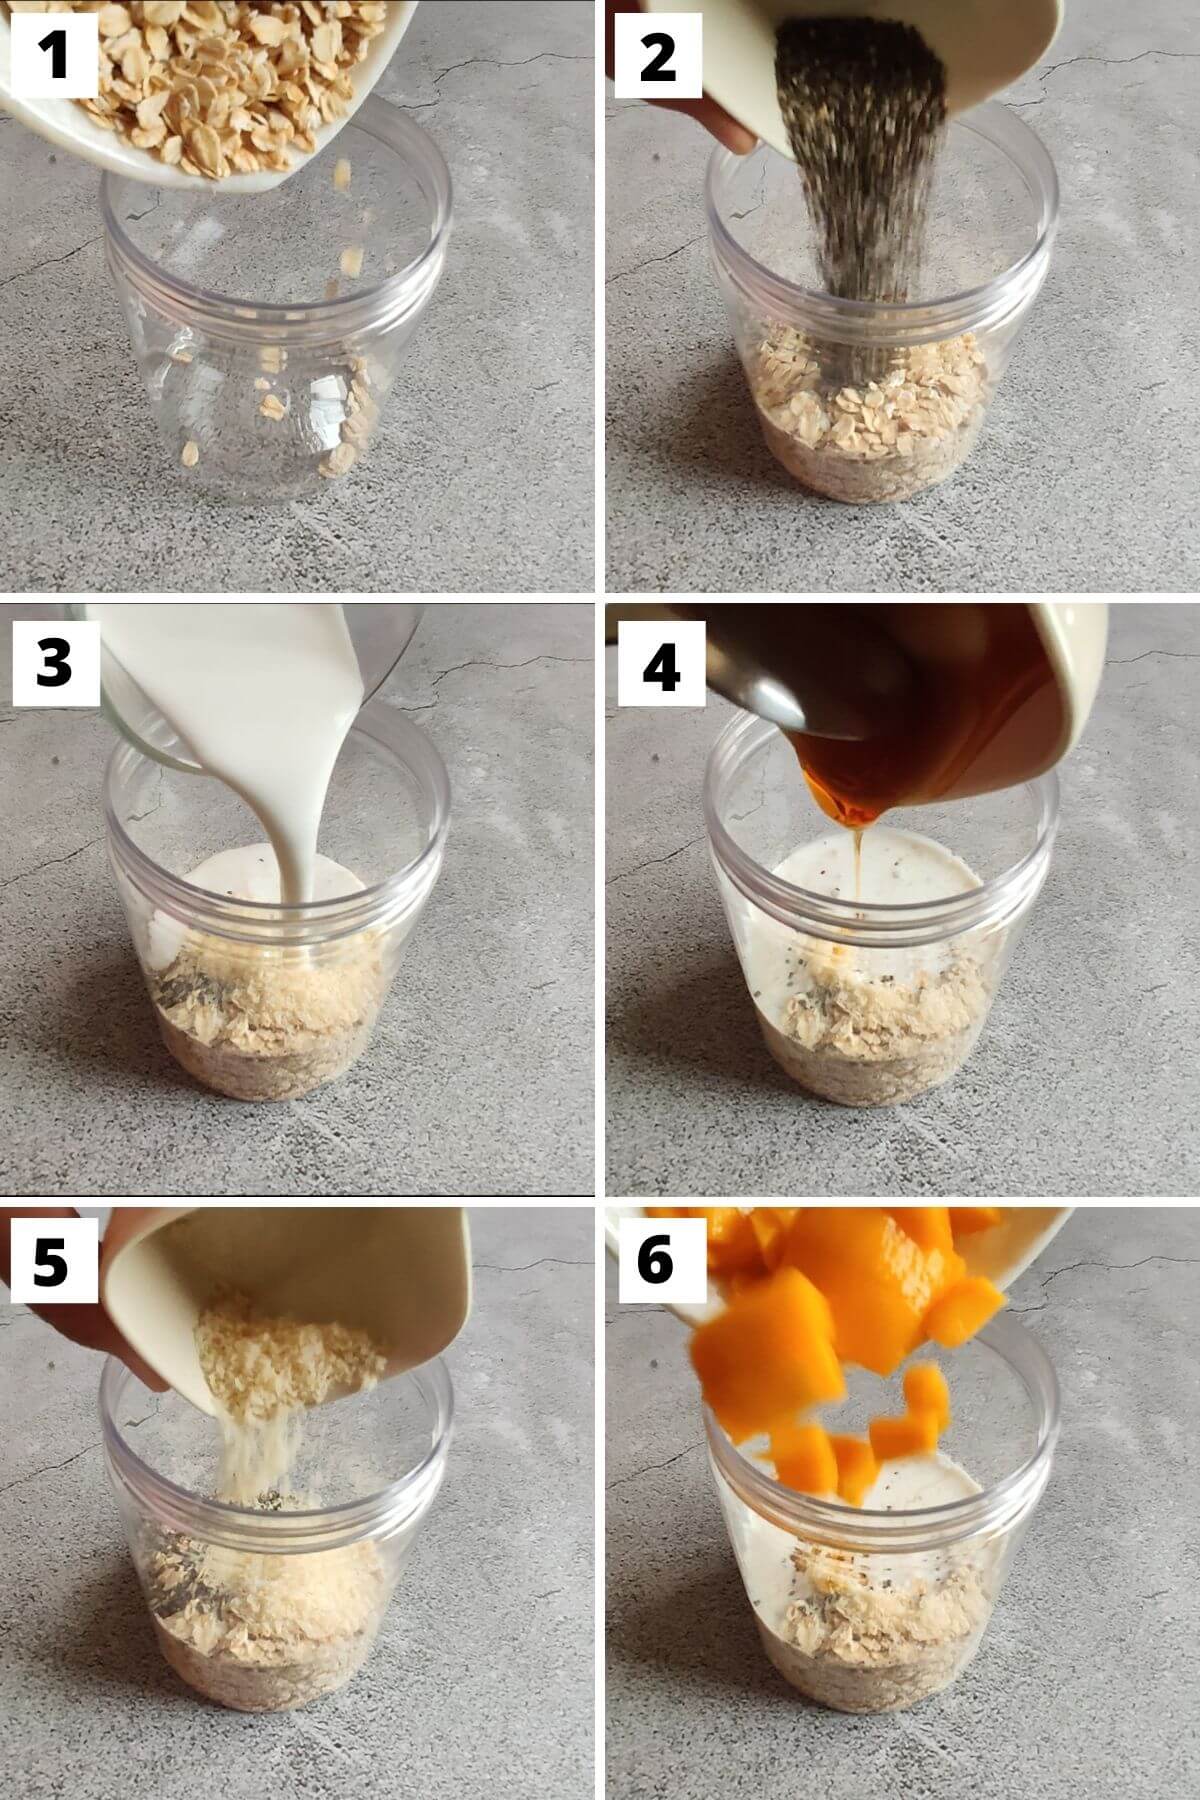 Steps to make mango coconut overnight oats